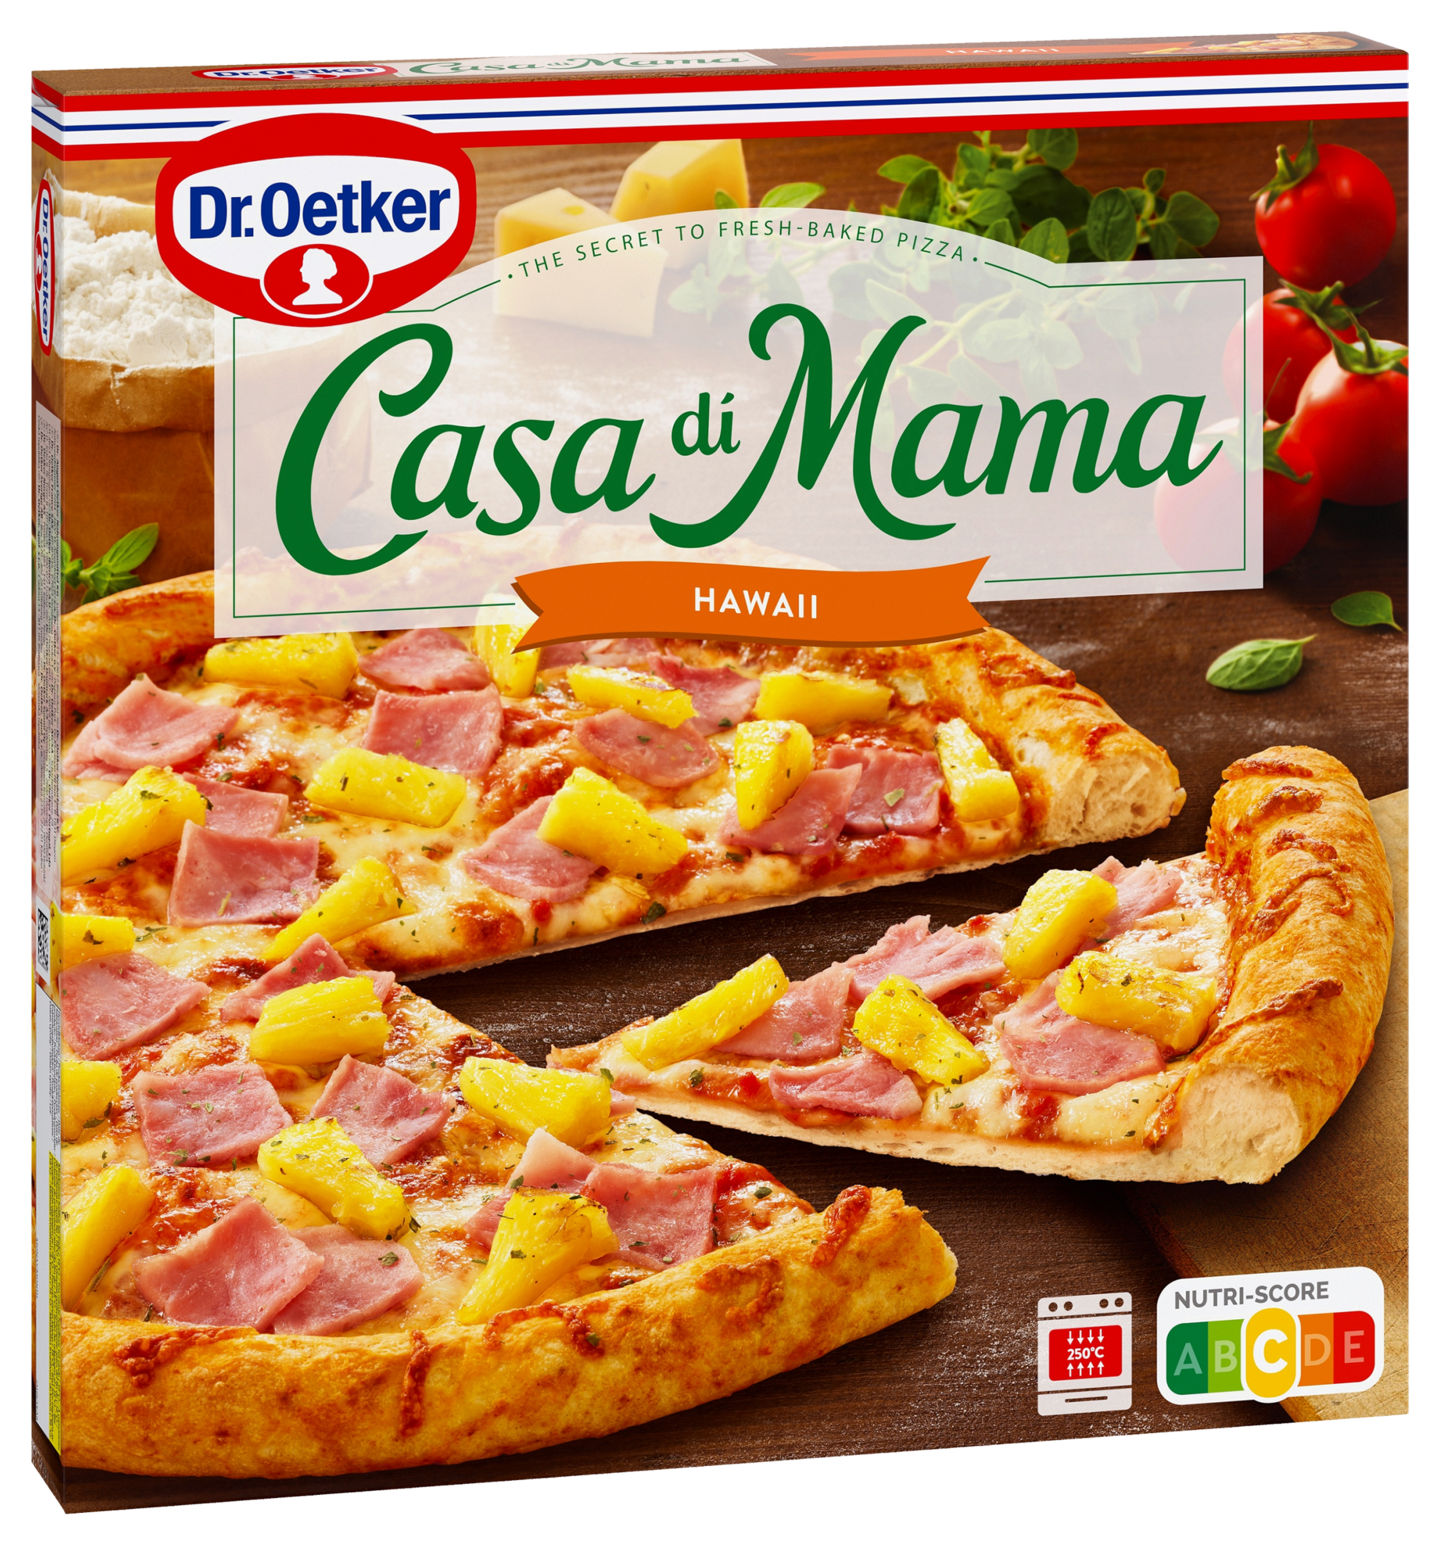 Dr. Oetker Casa di Mama pizza 415g Hawaii pakaste